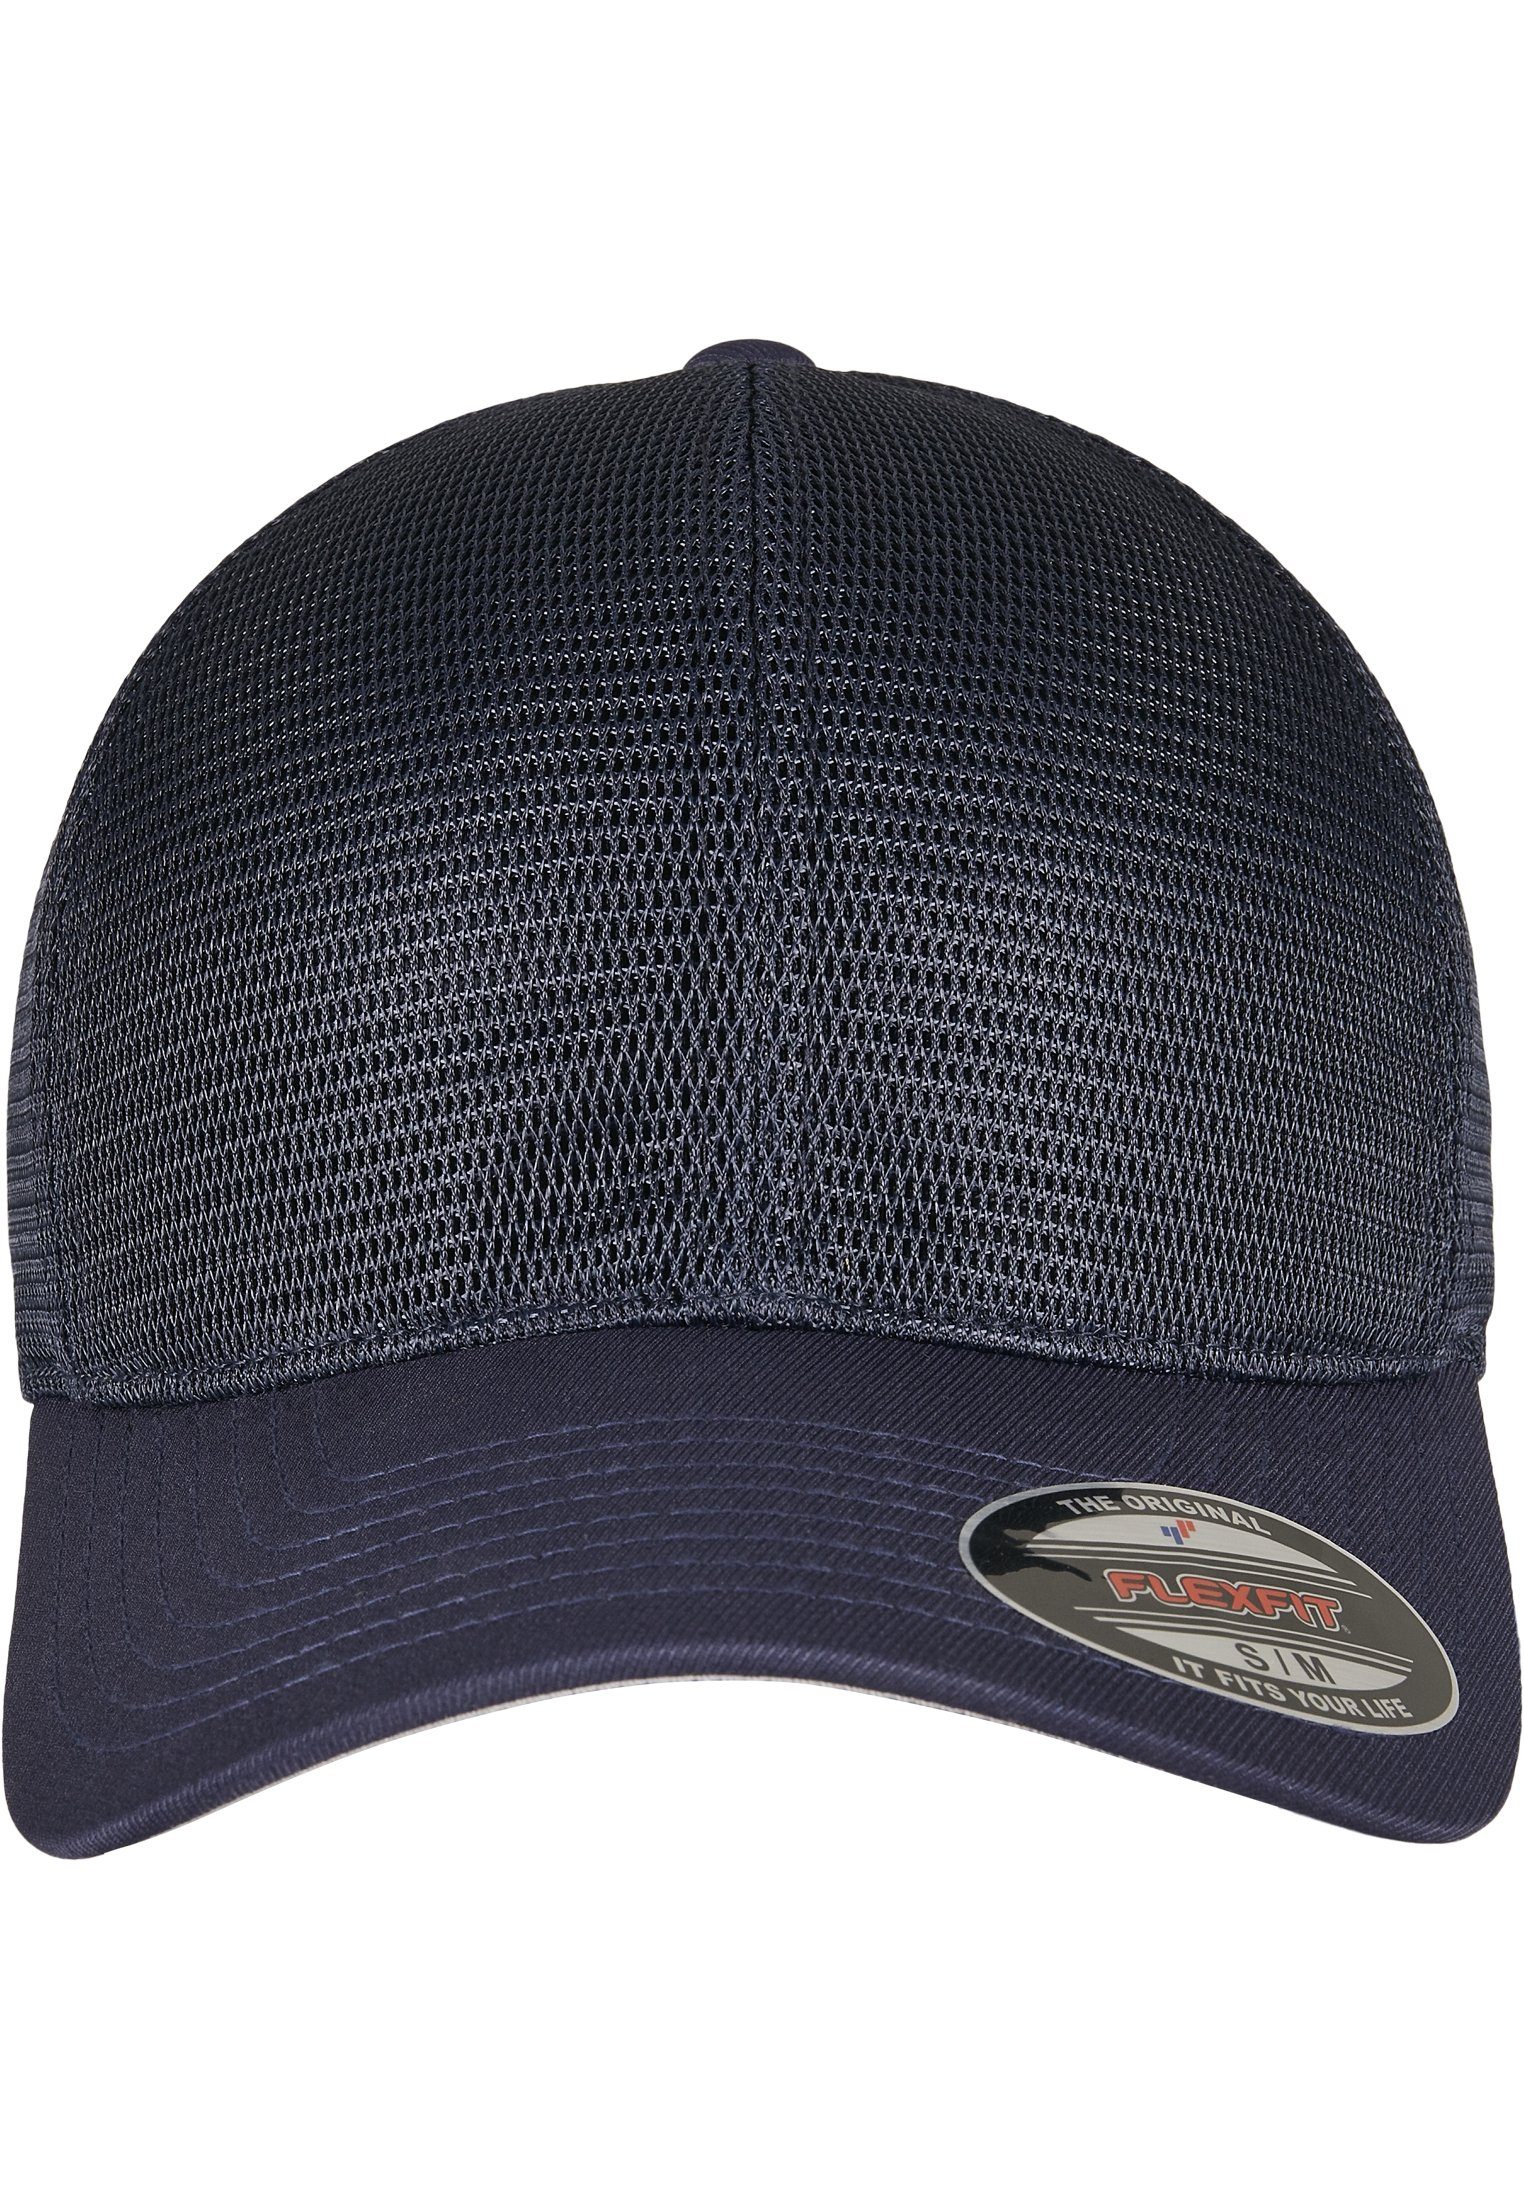 Flexfit Flex navy 360 FLEXFIT CAP Accessoires OMNIMESH Cap